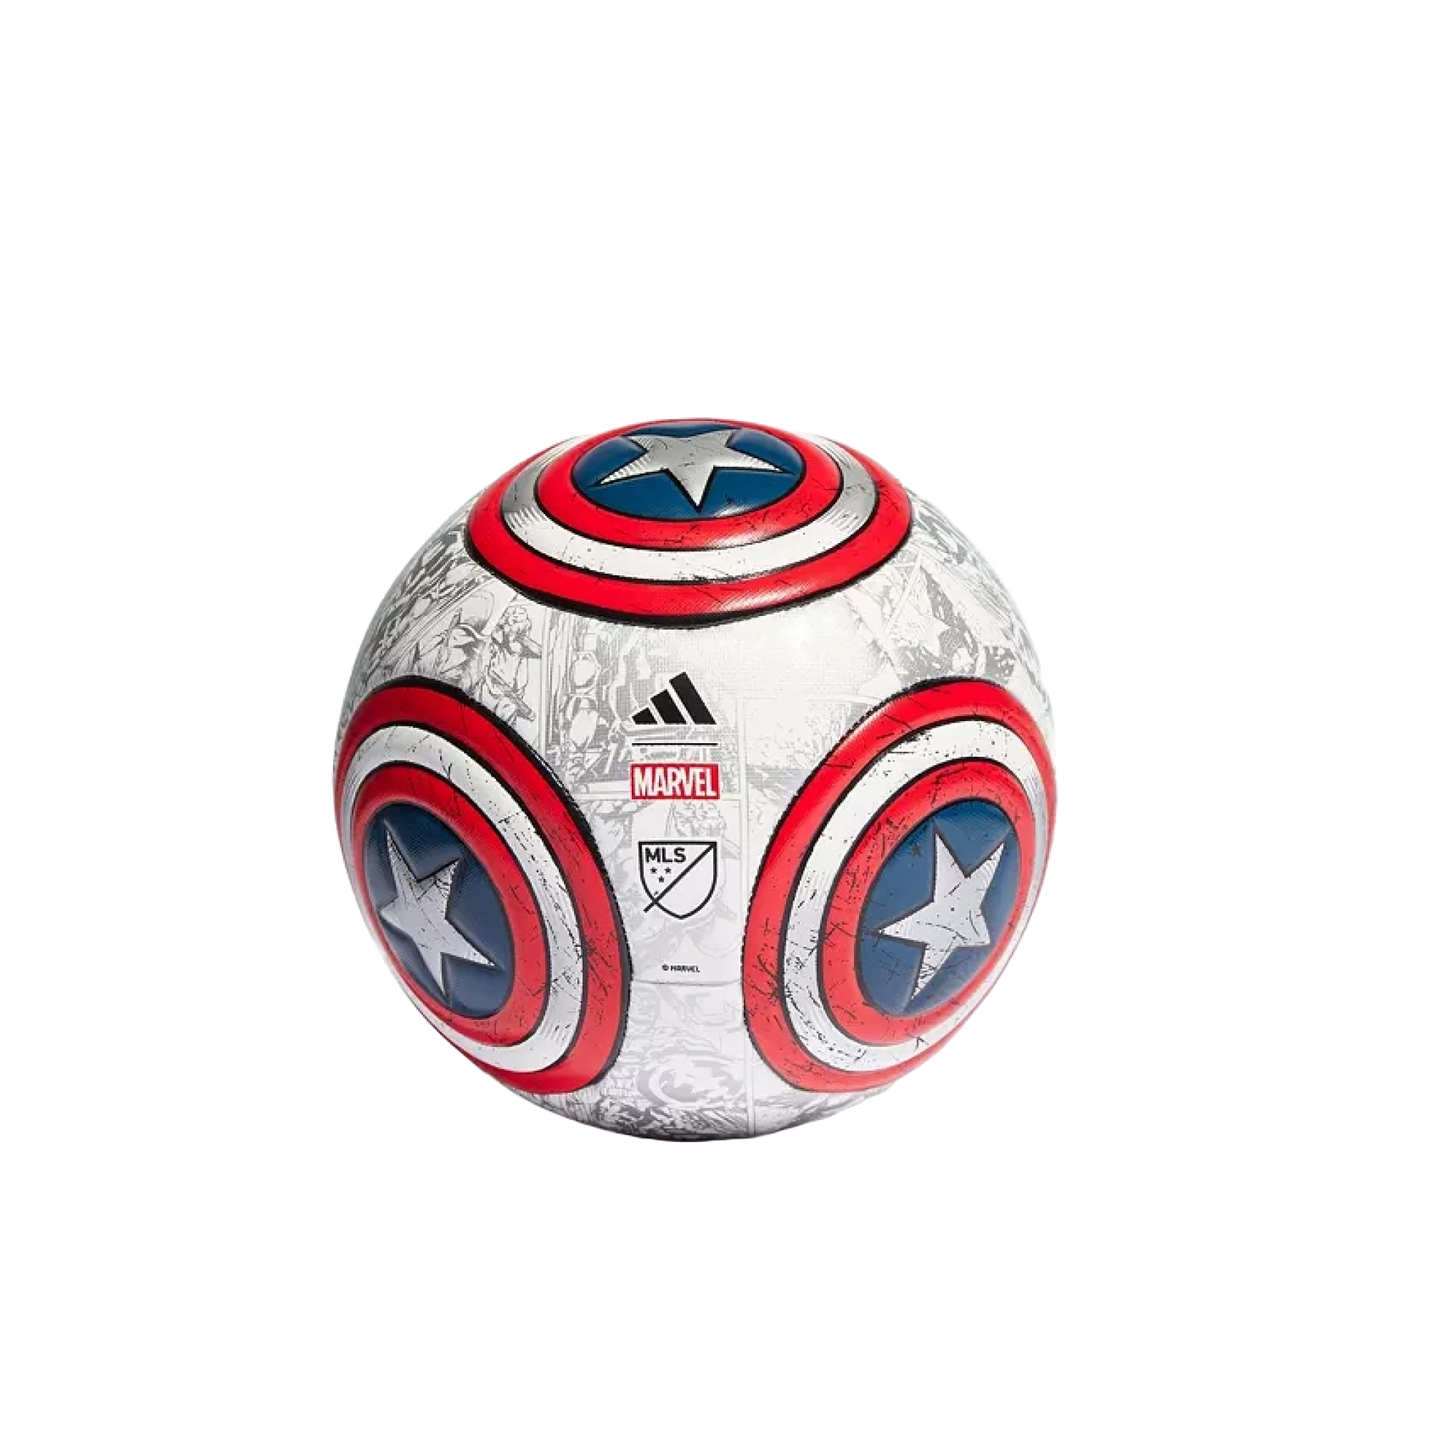 MLS Captain America Mini Ball